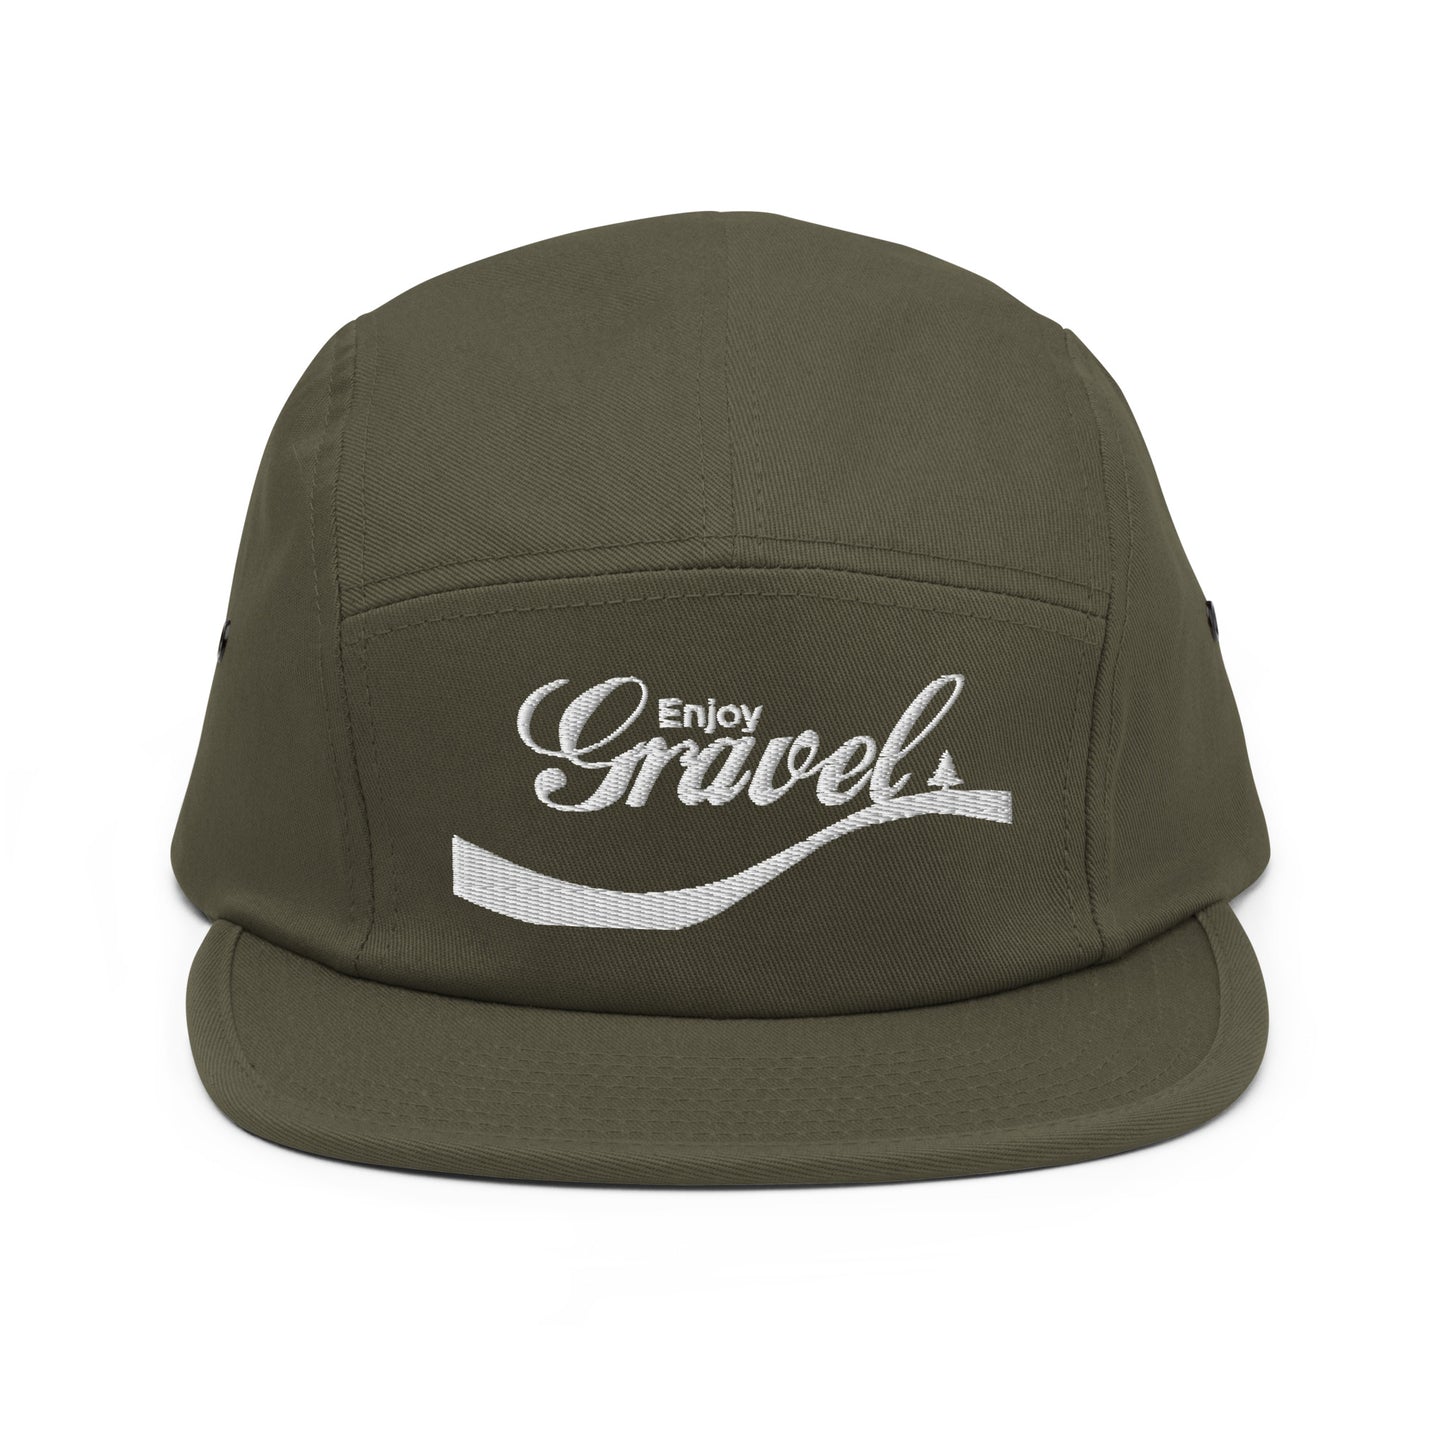 Enjoy Gravel Camper Cap